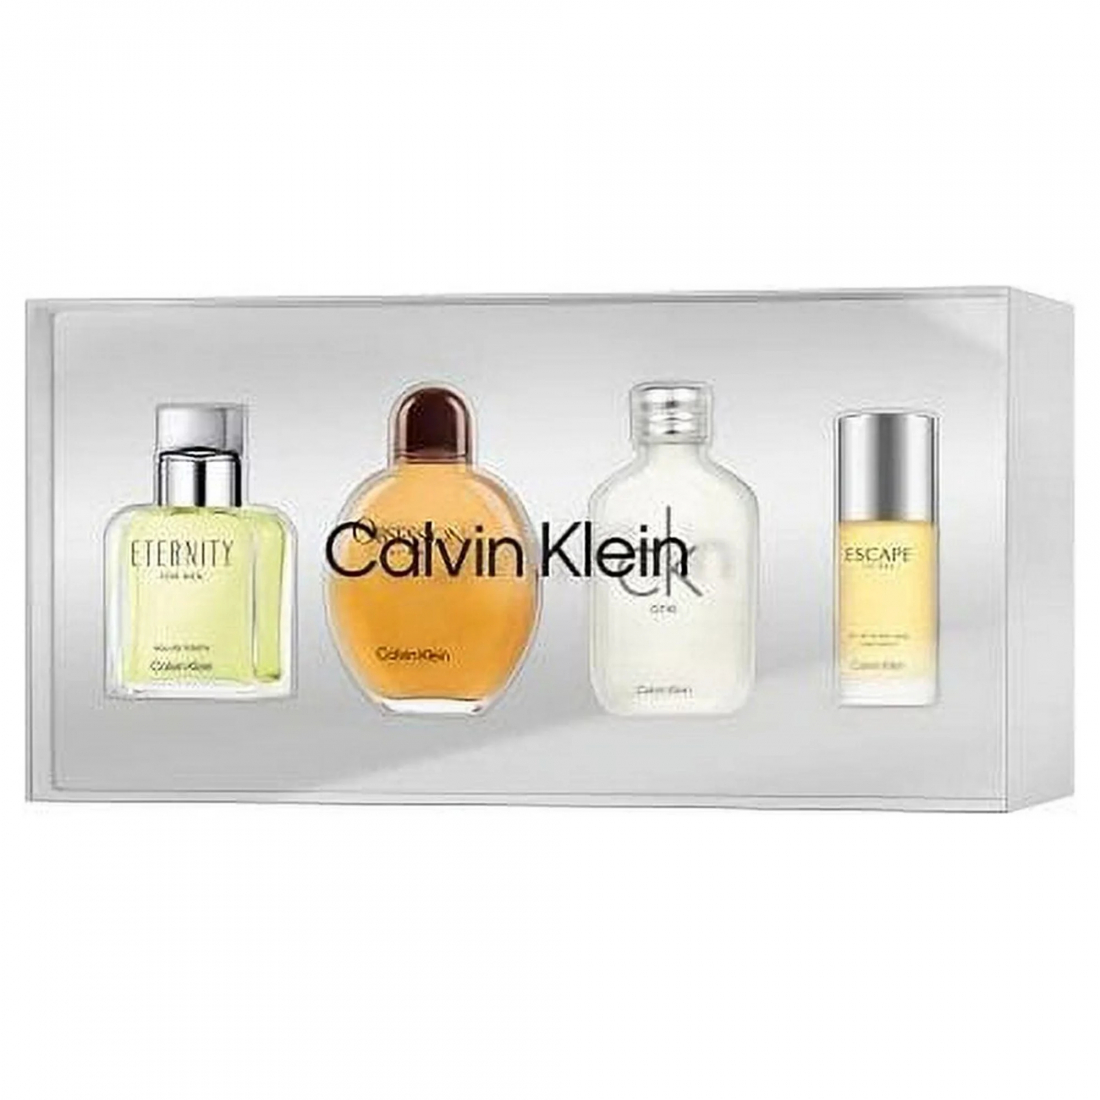 'Mini Cologne' Perfume Set - 4 Pieces